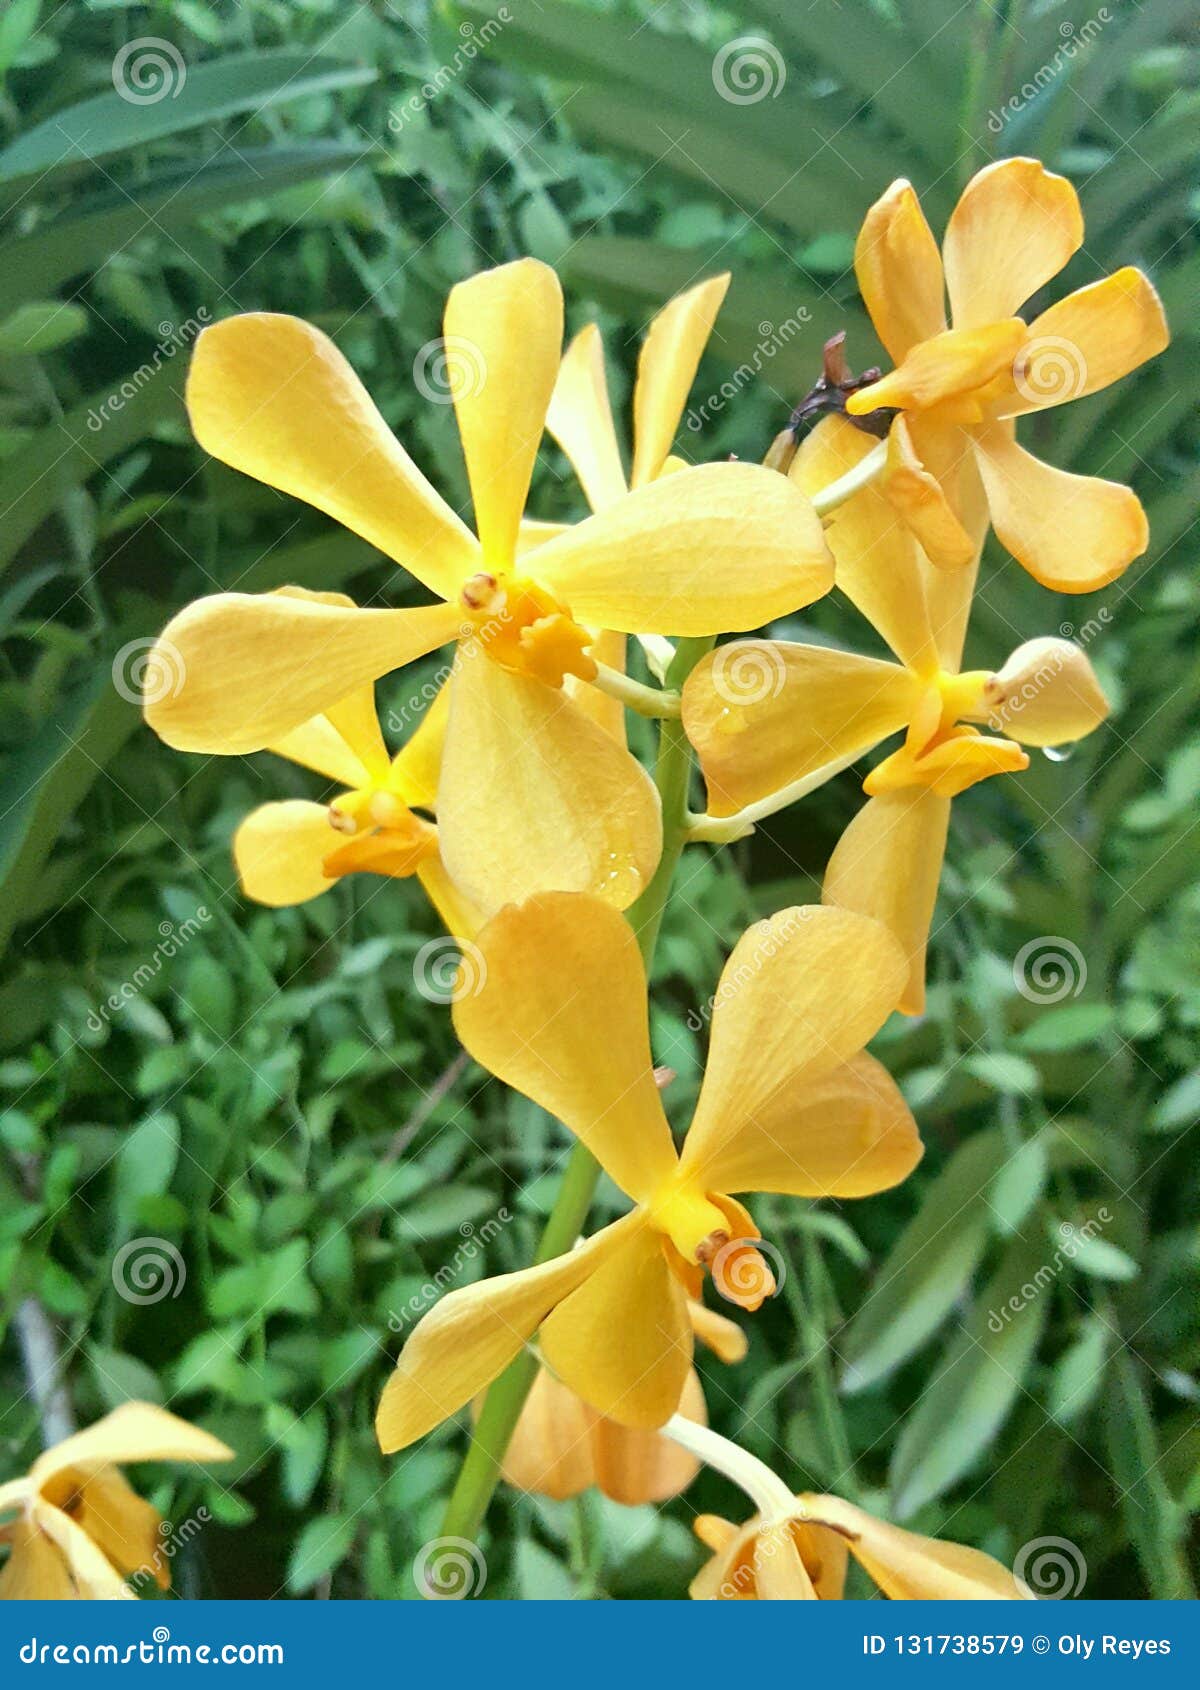 Vanda Orchids jaune image stock. Image du jour, vert - 131738579